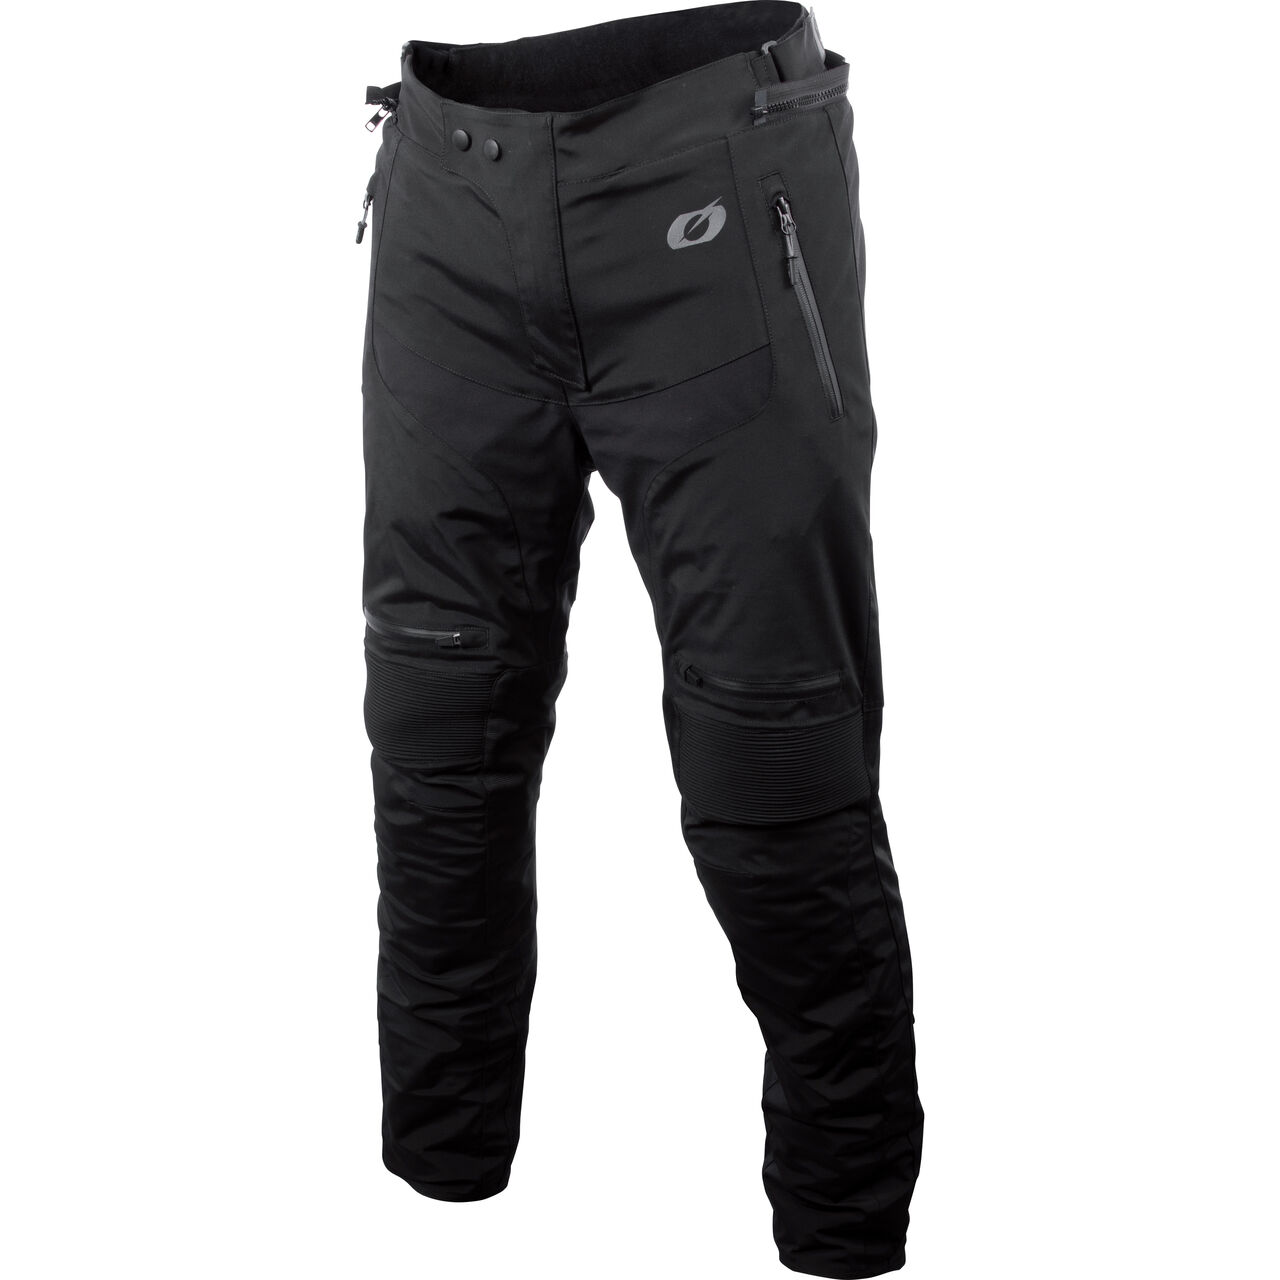 Sierra textile pants black 44